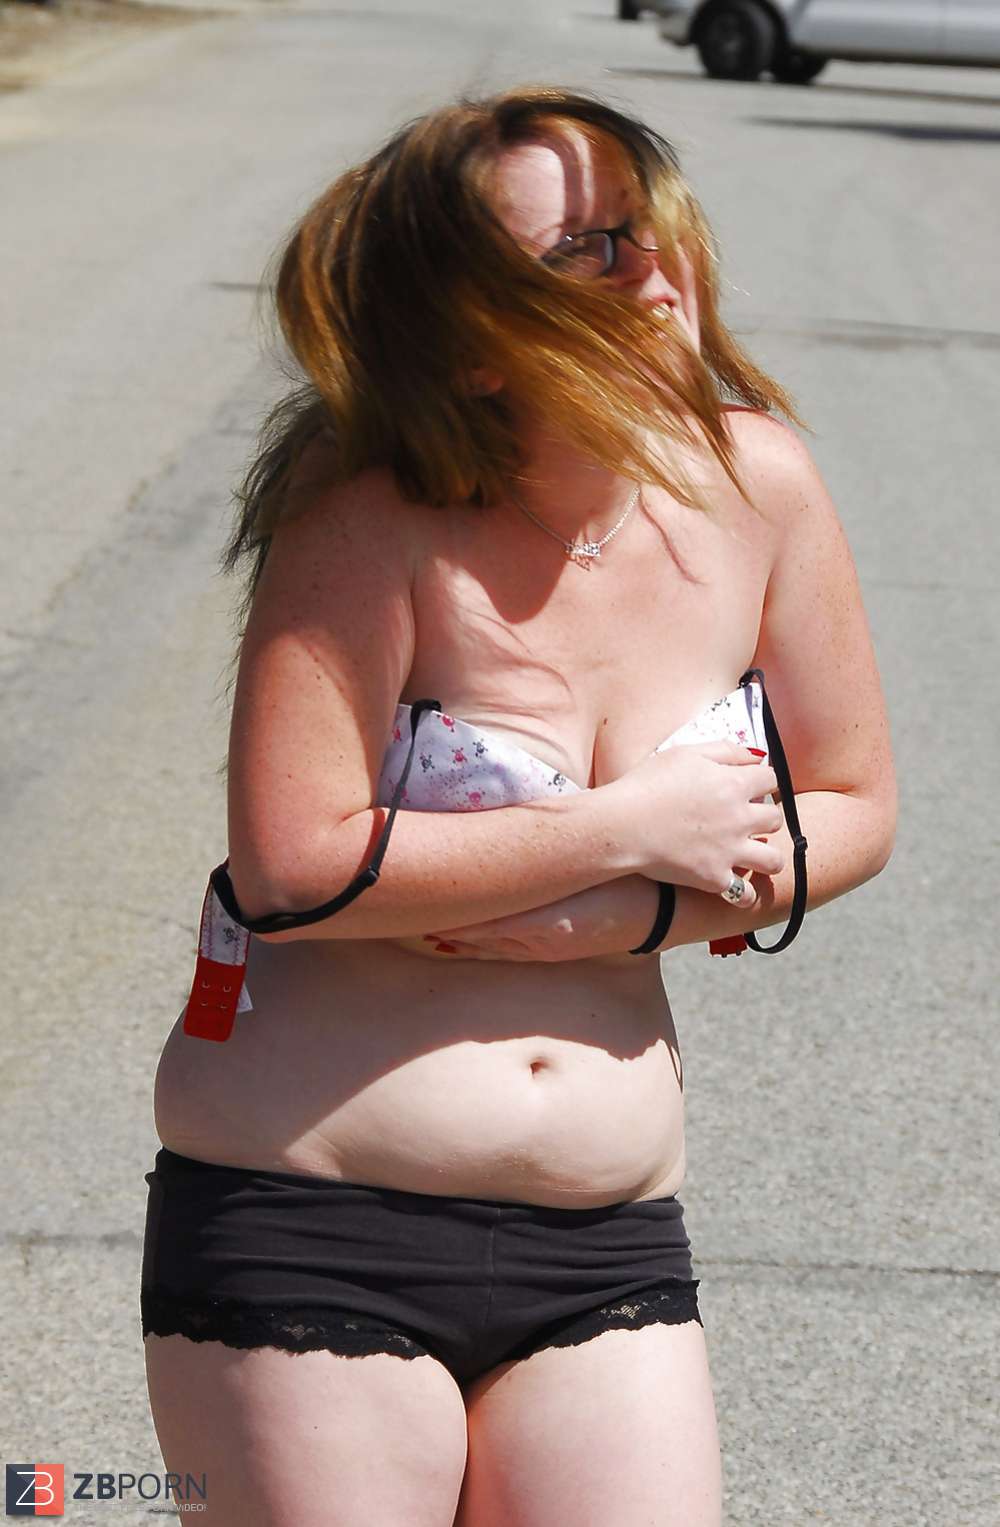 CANDID voyeur teenager upskirt undies displaying public bra-stuffers